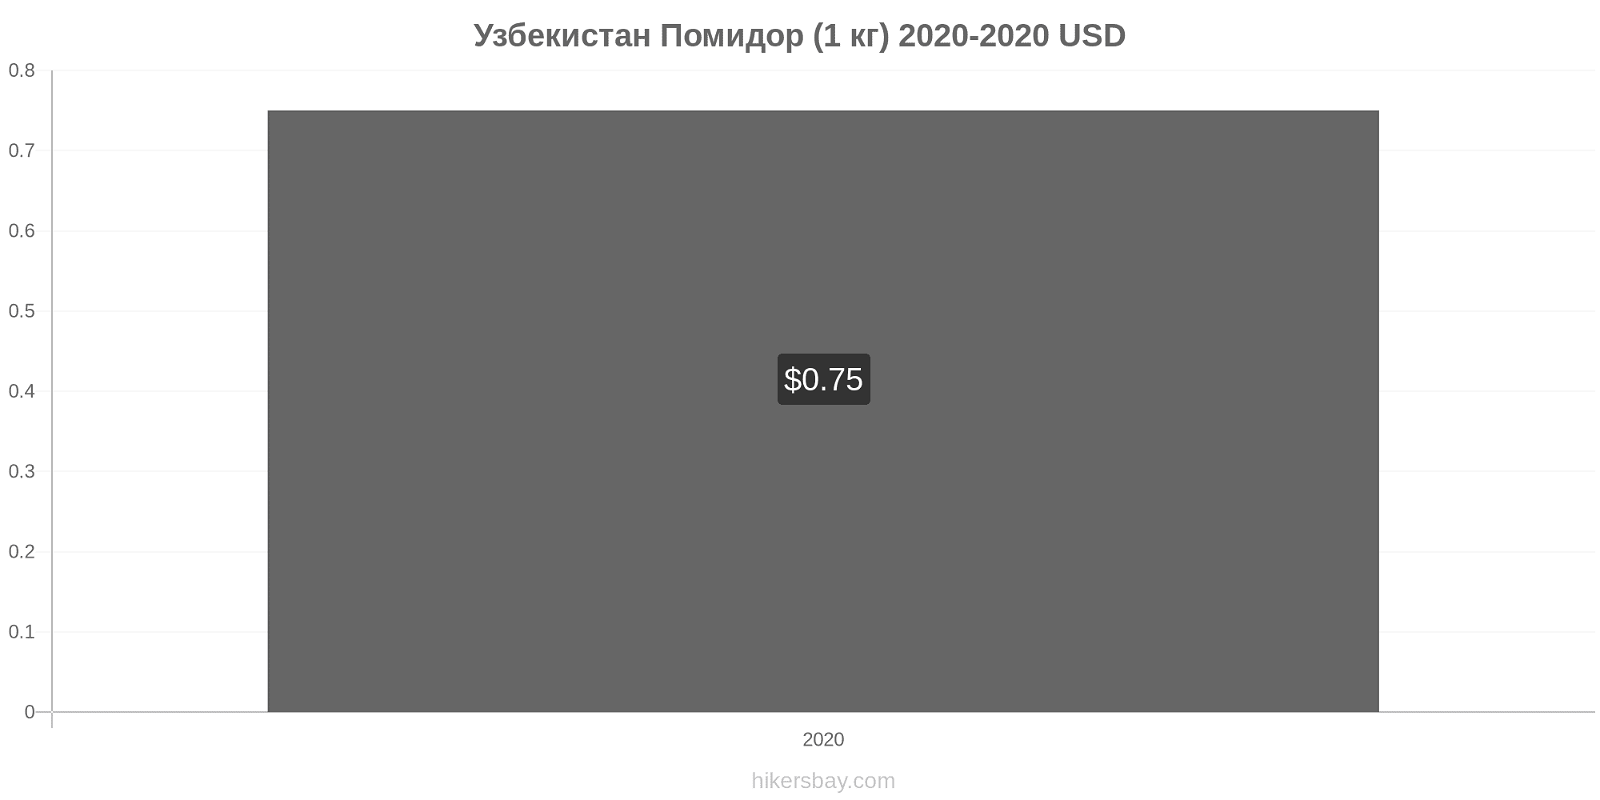 Узбекистан изменения цен Помидор (1 кг) hikersbay.com